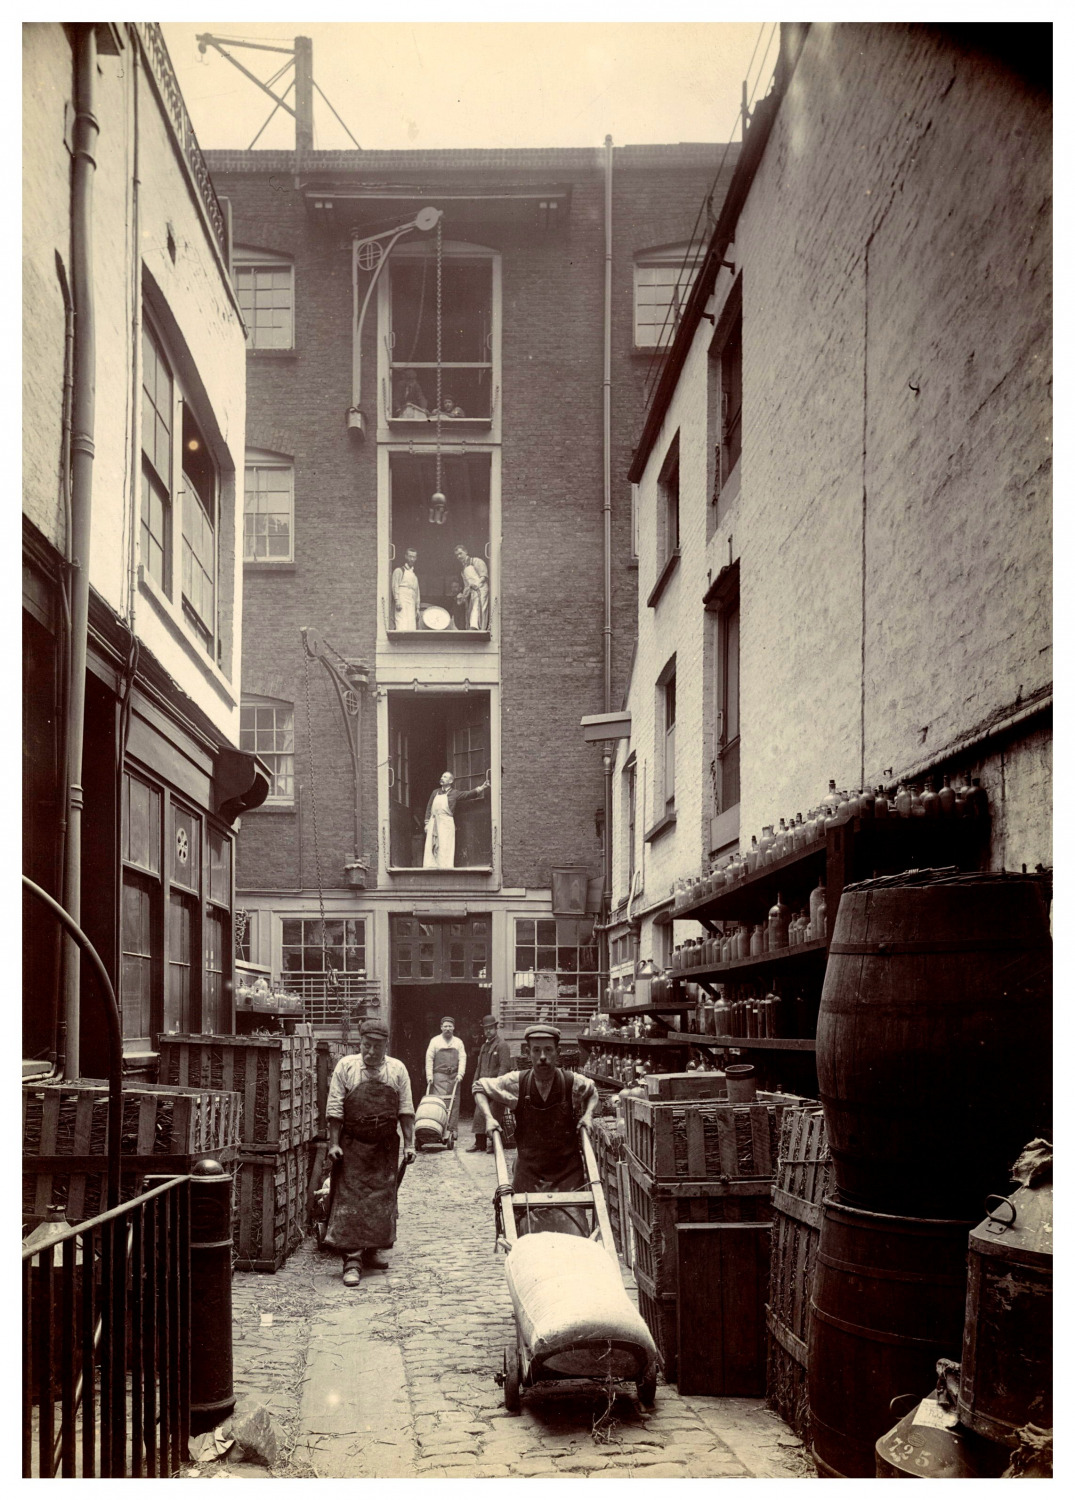 Richard William Thomas (Att. to), England, London, Warehouse, Vintage Workers a